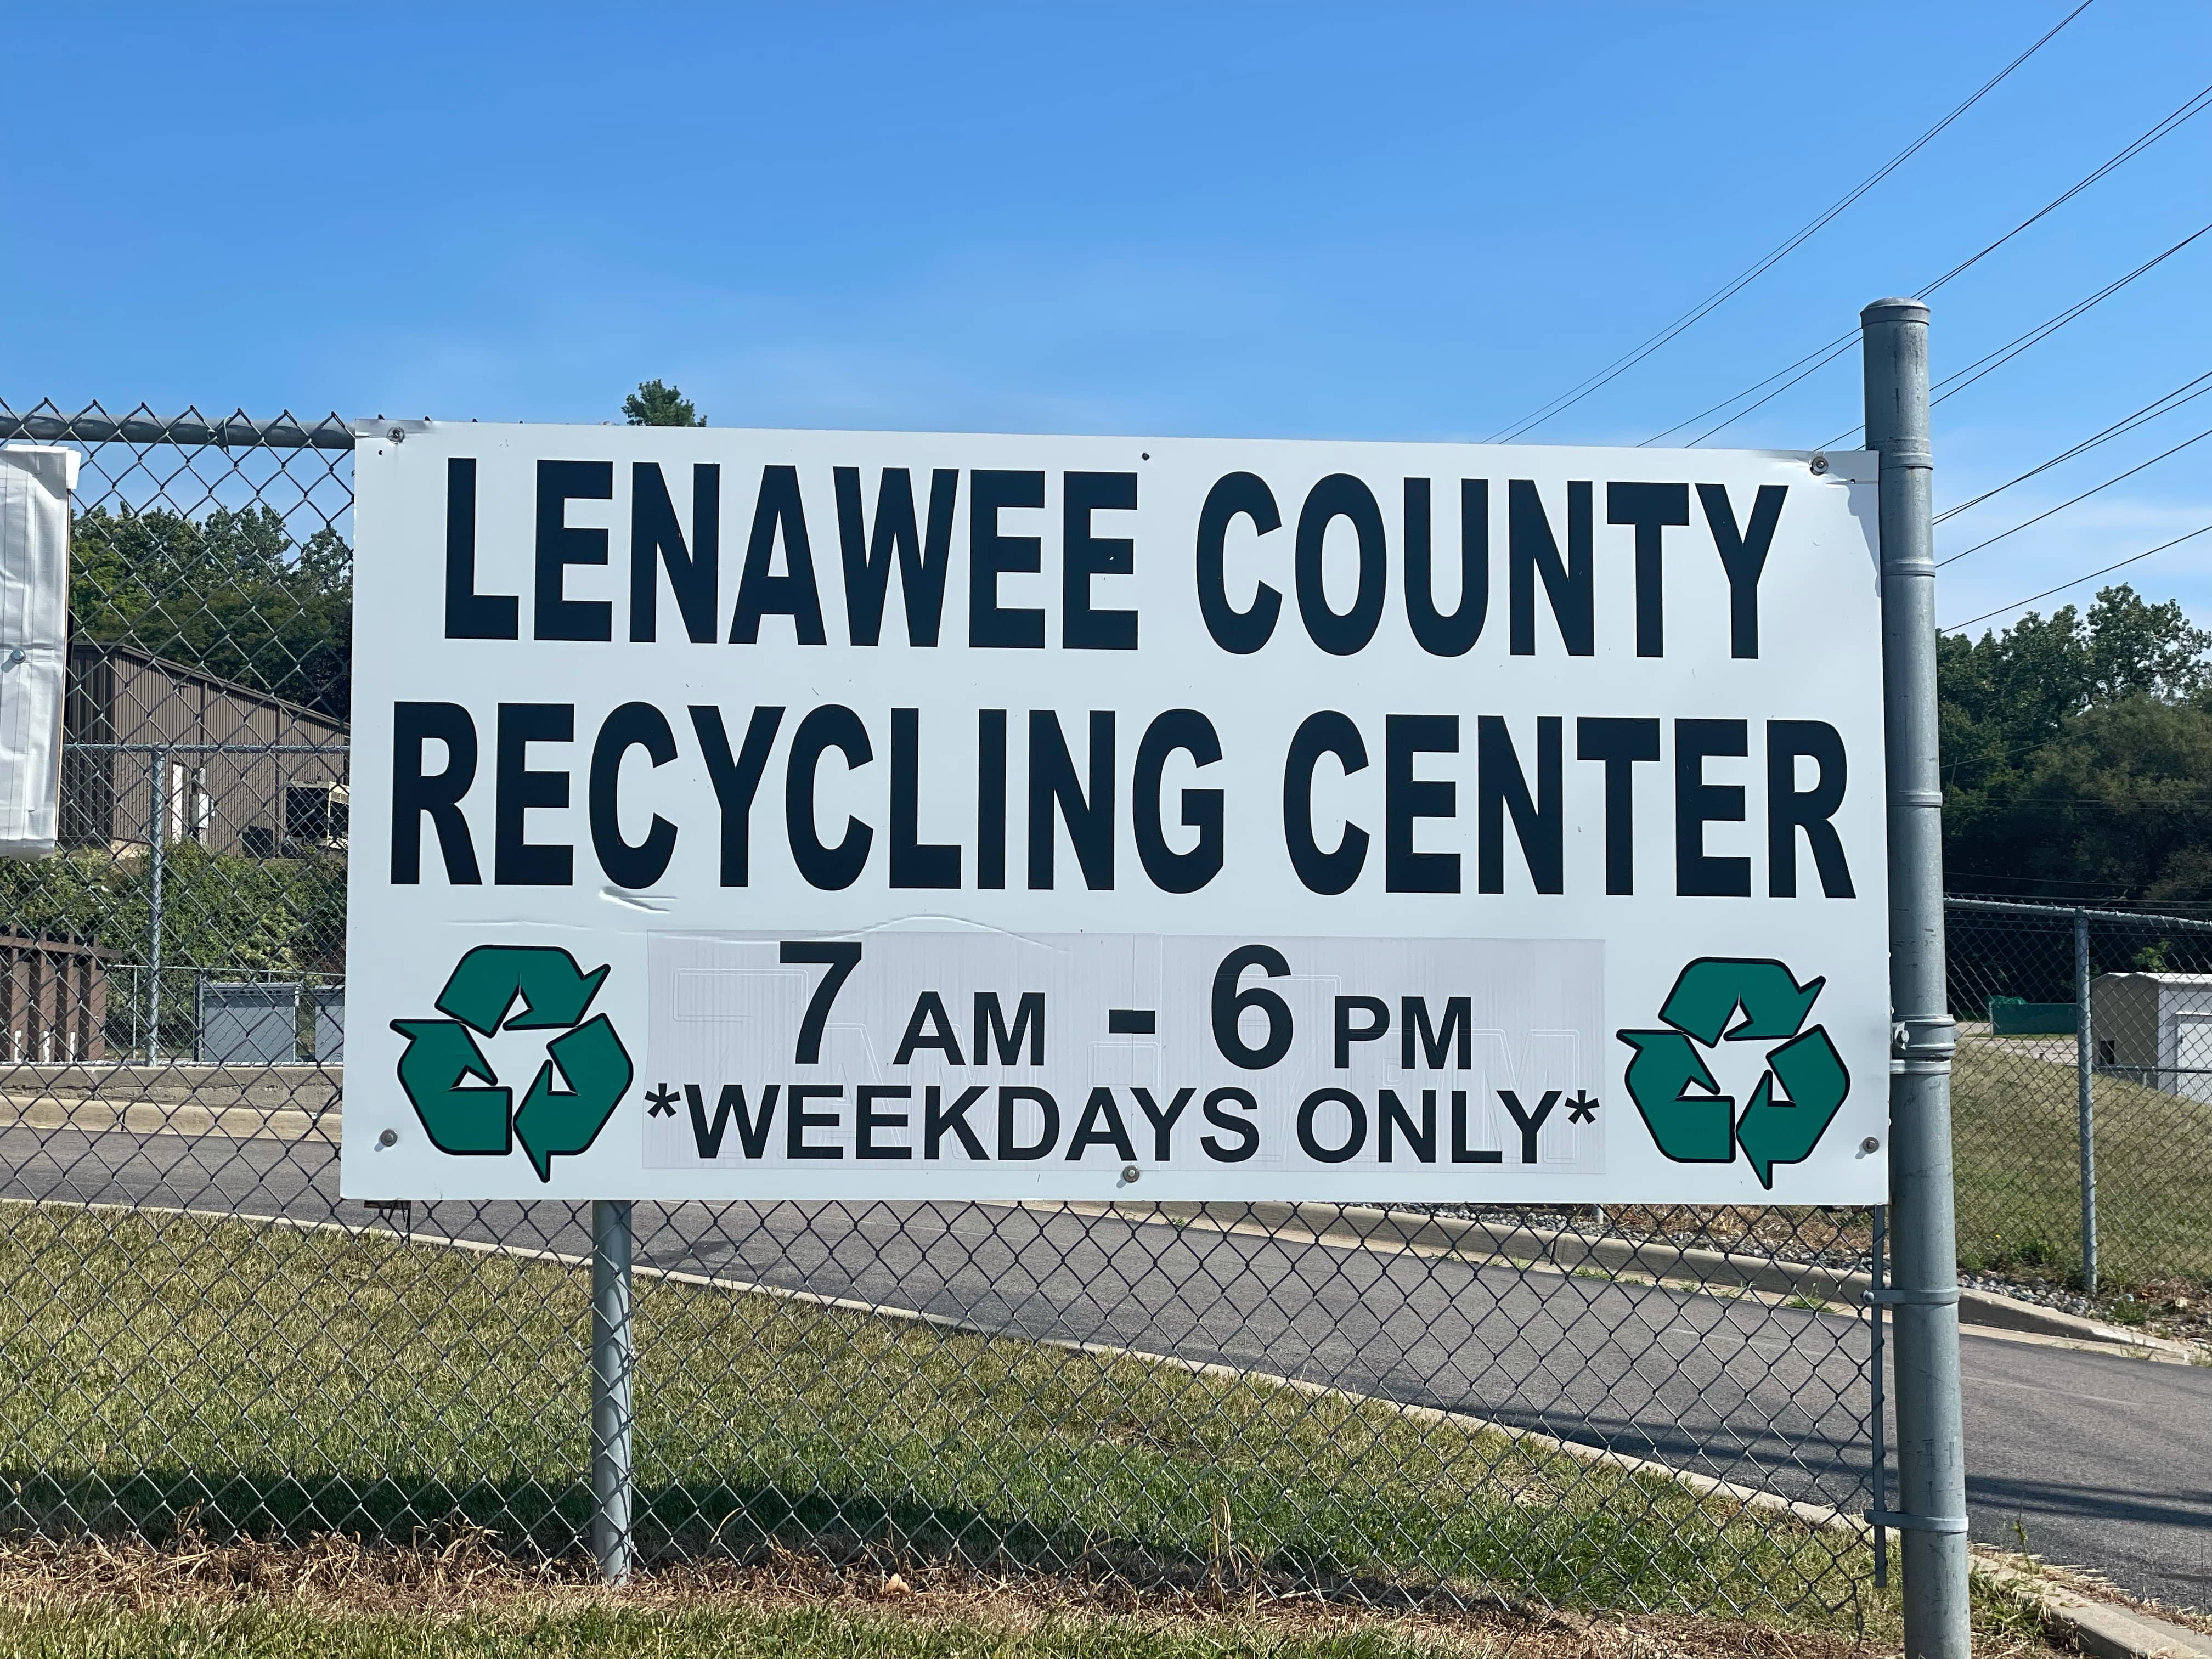 Job openings in lenawee county michigan